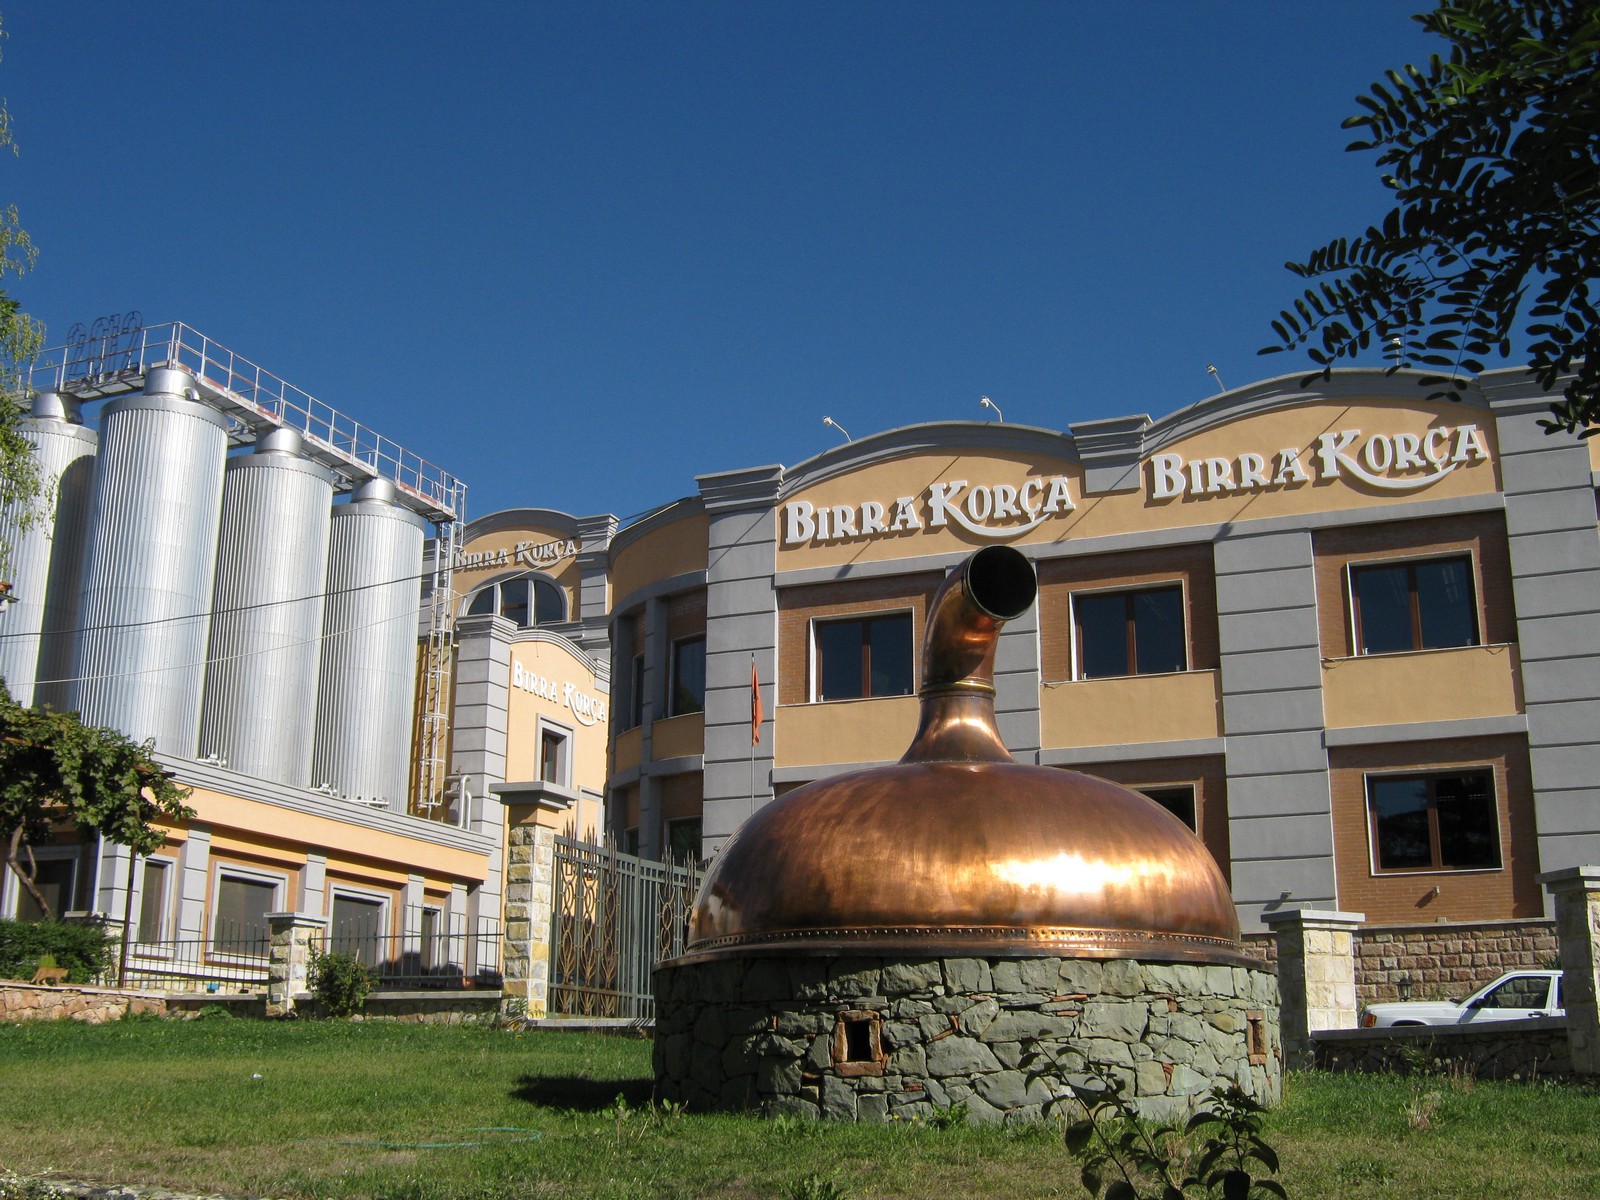 Die bekannte Bierbrauerei in Korca - Lupe Reisen